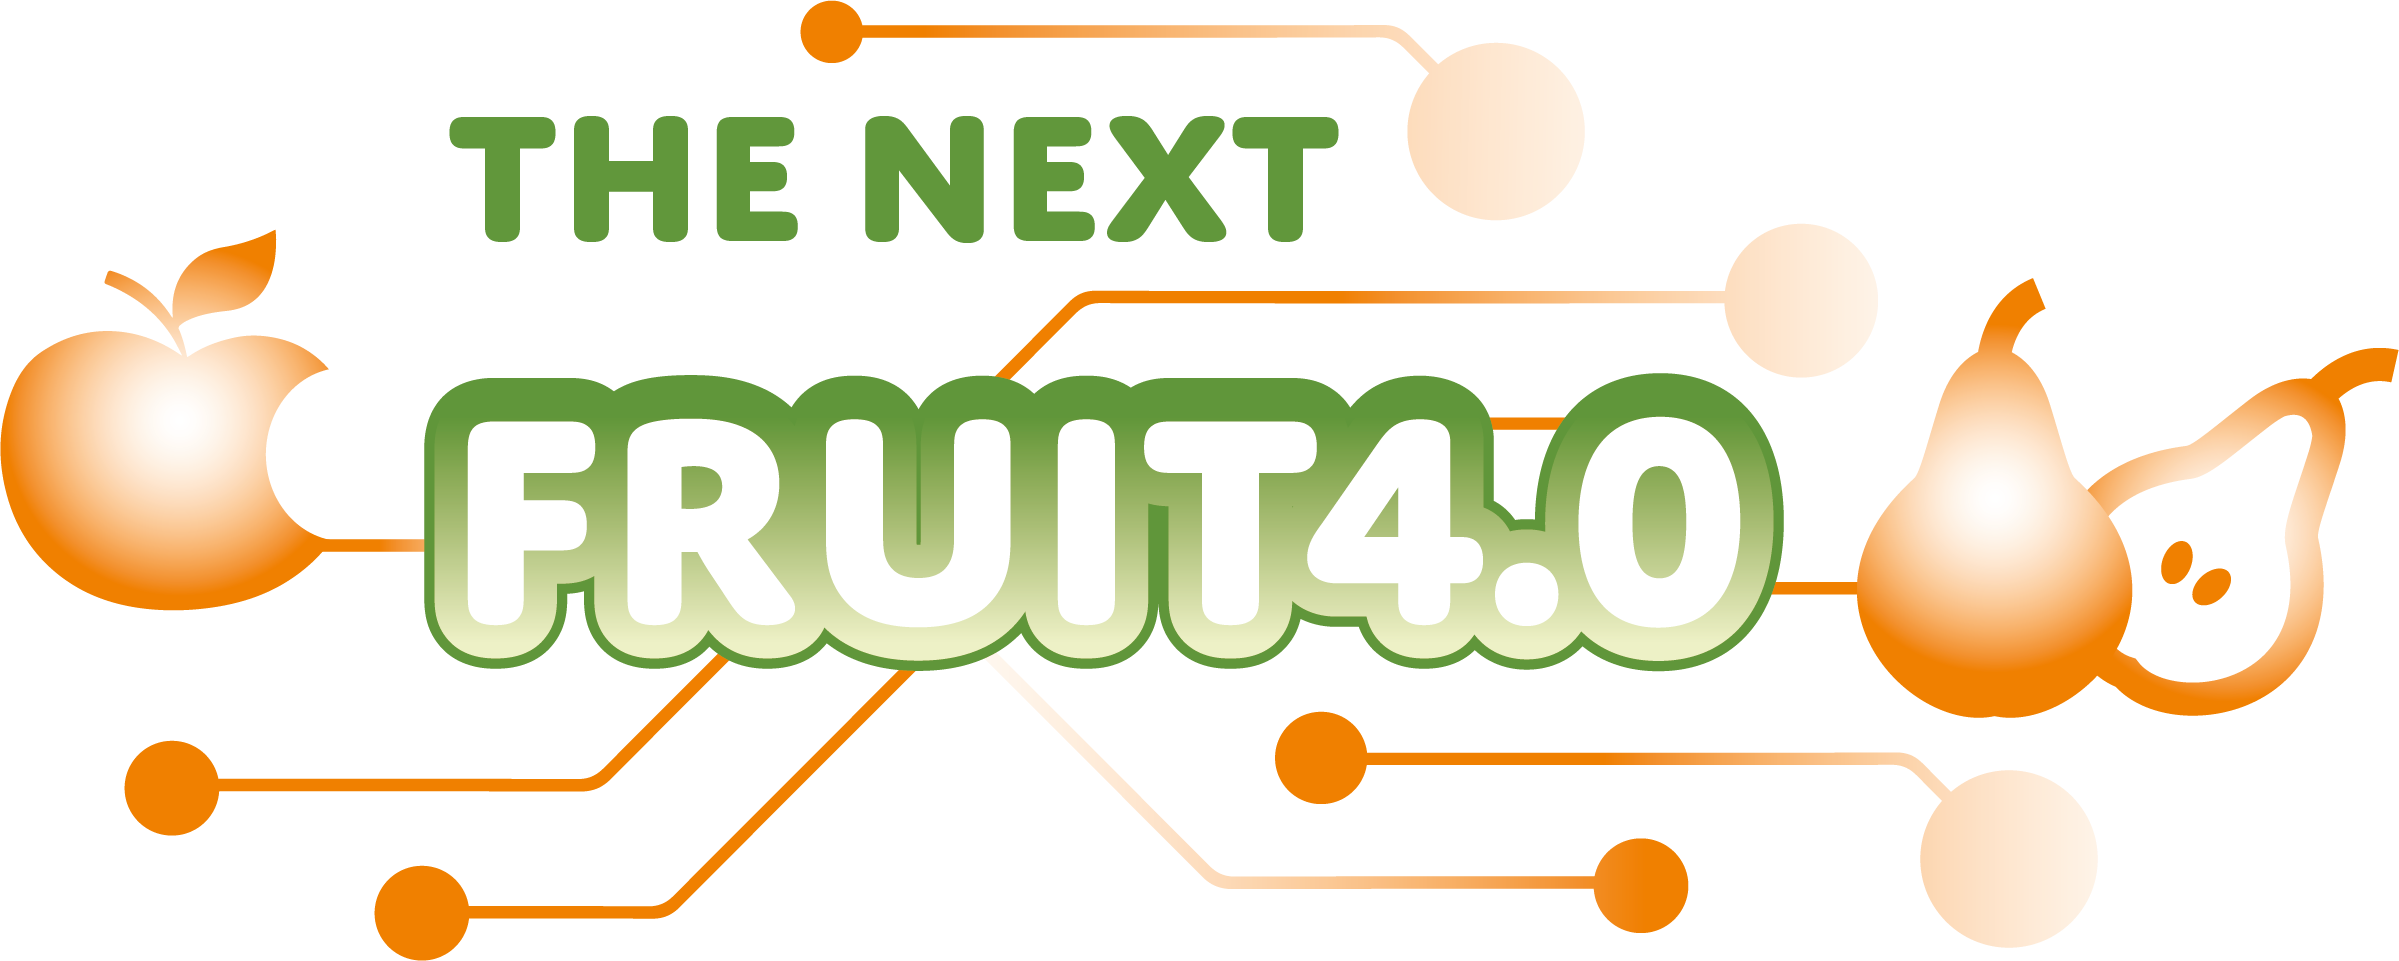 FRUIT4.0-TheNext-logo.png